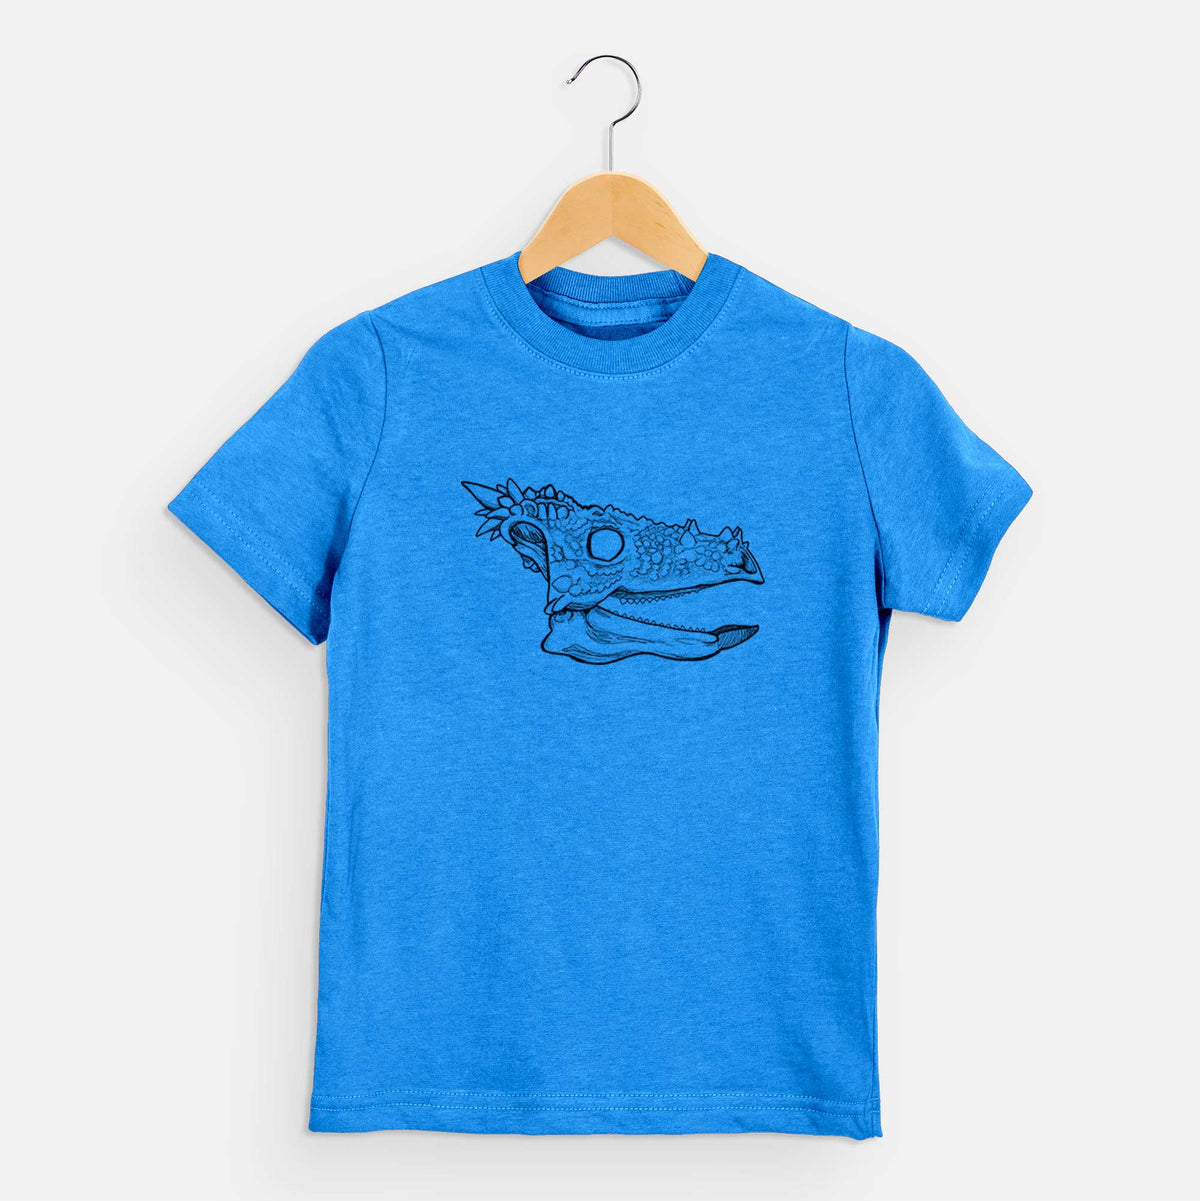 Dracorex Skull - Kids Shirt